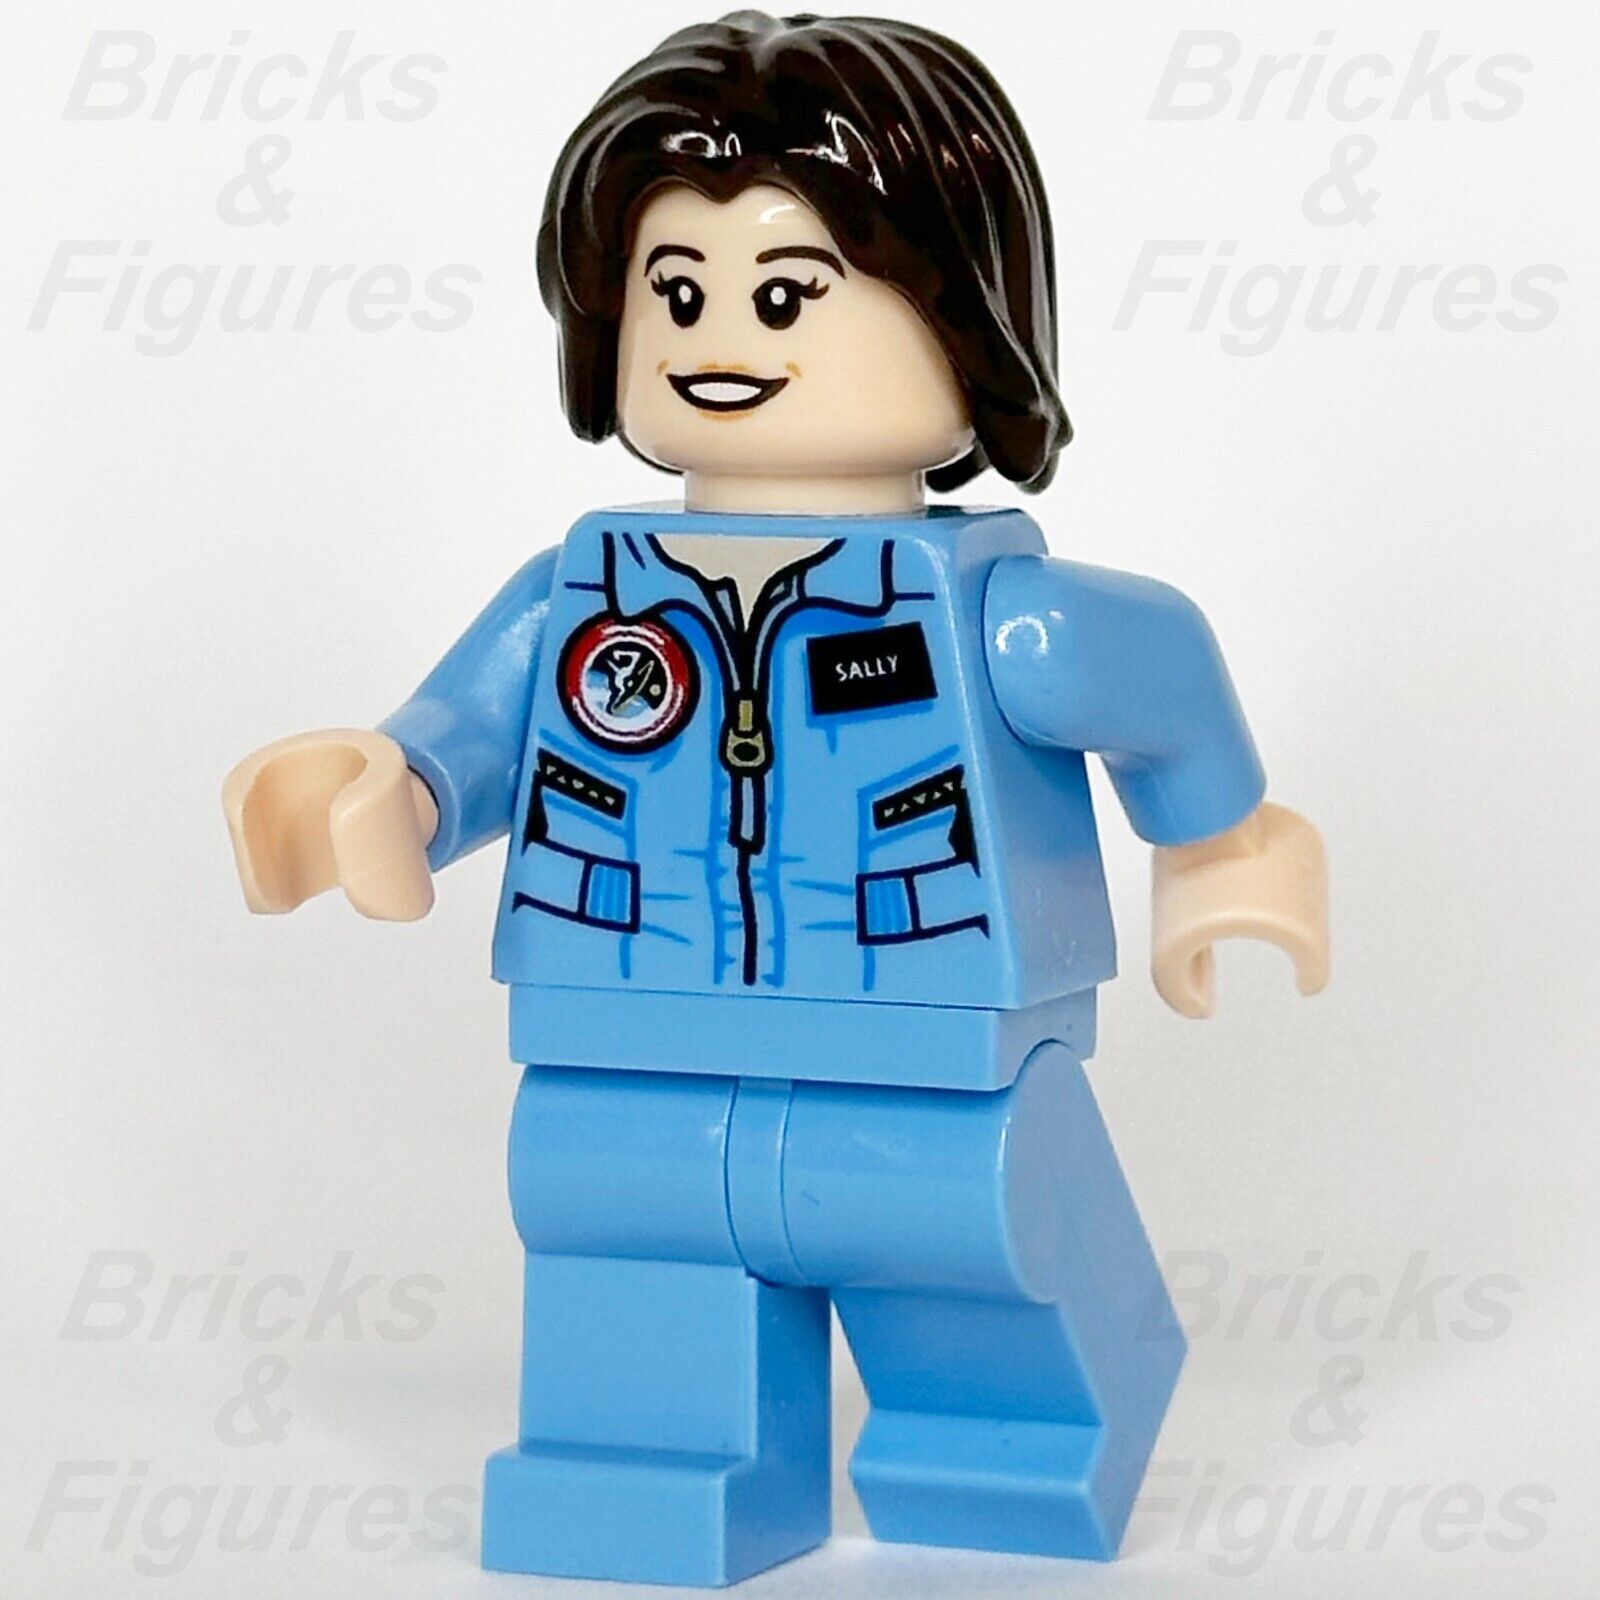 LEGO Ideas Sally Ride Minifigure Astronaut Women of NASA Minifig 21312 idea037 - Bricks & Figures